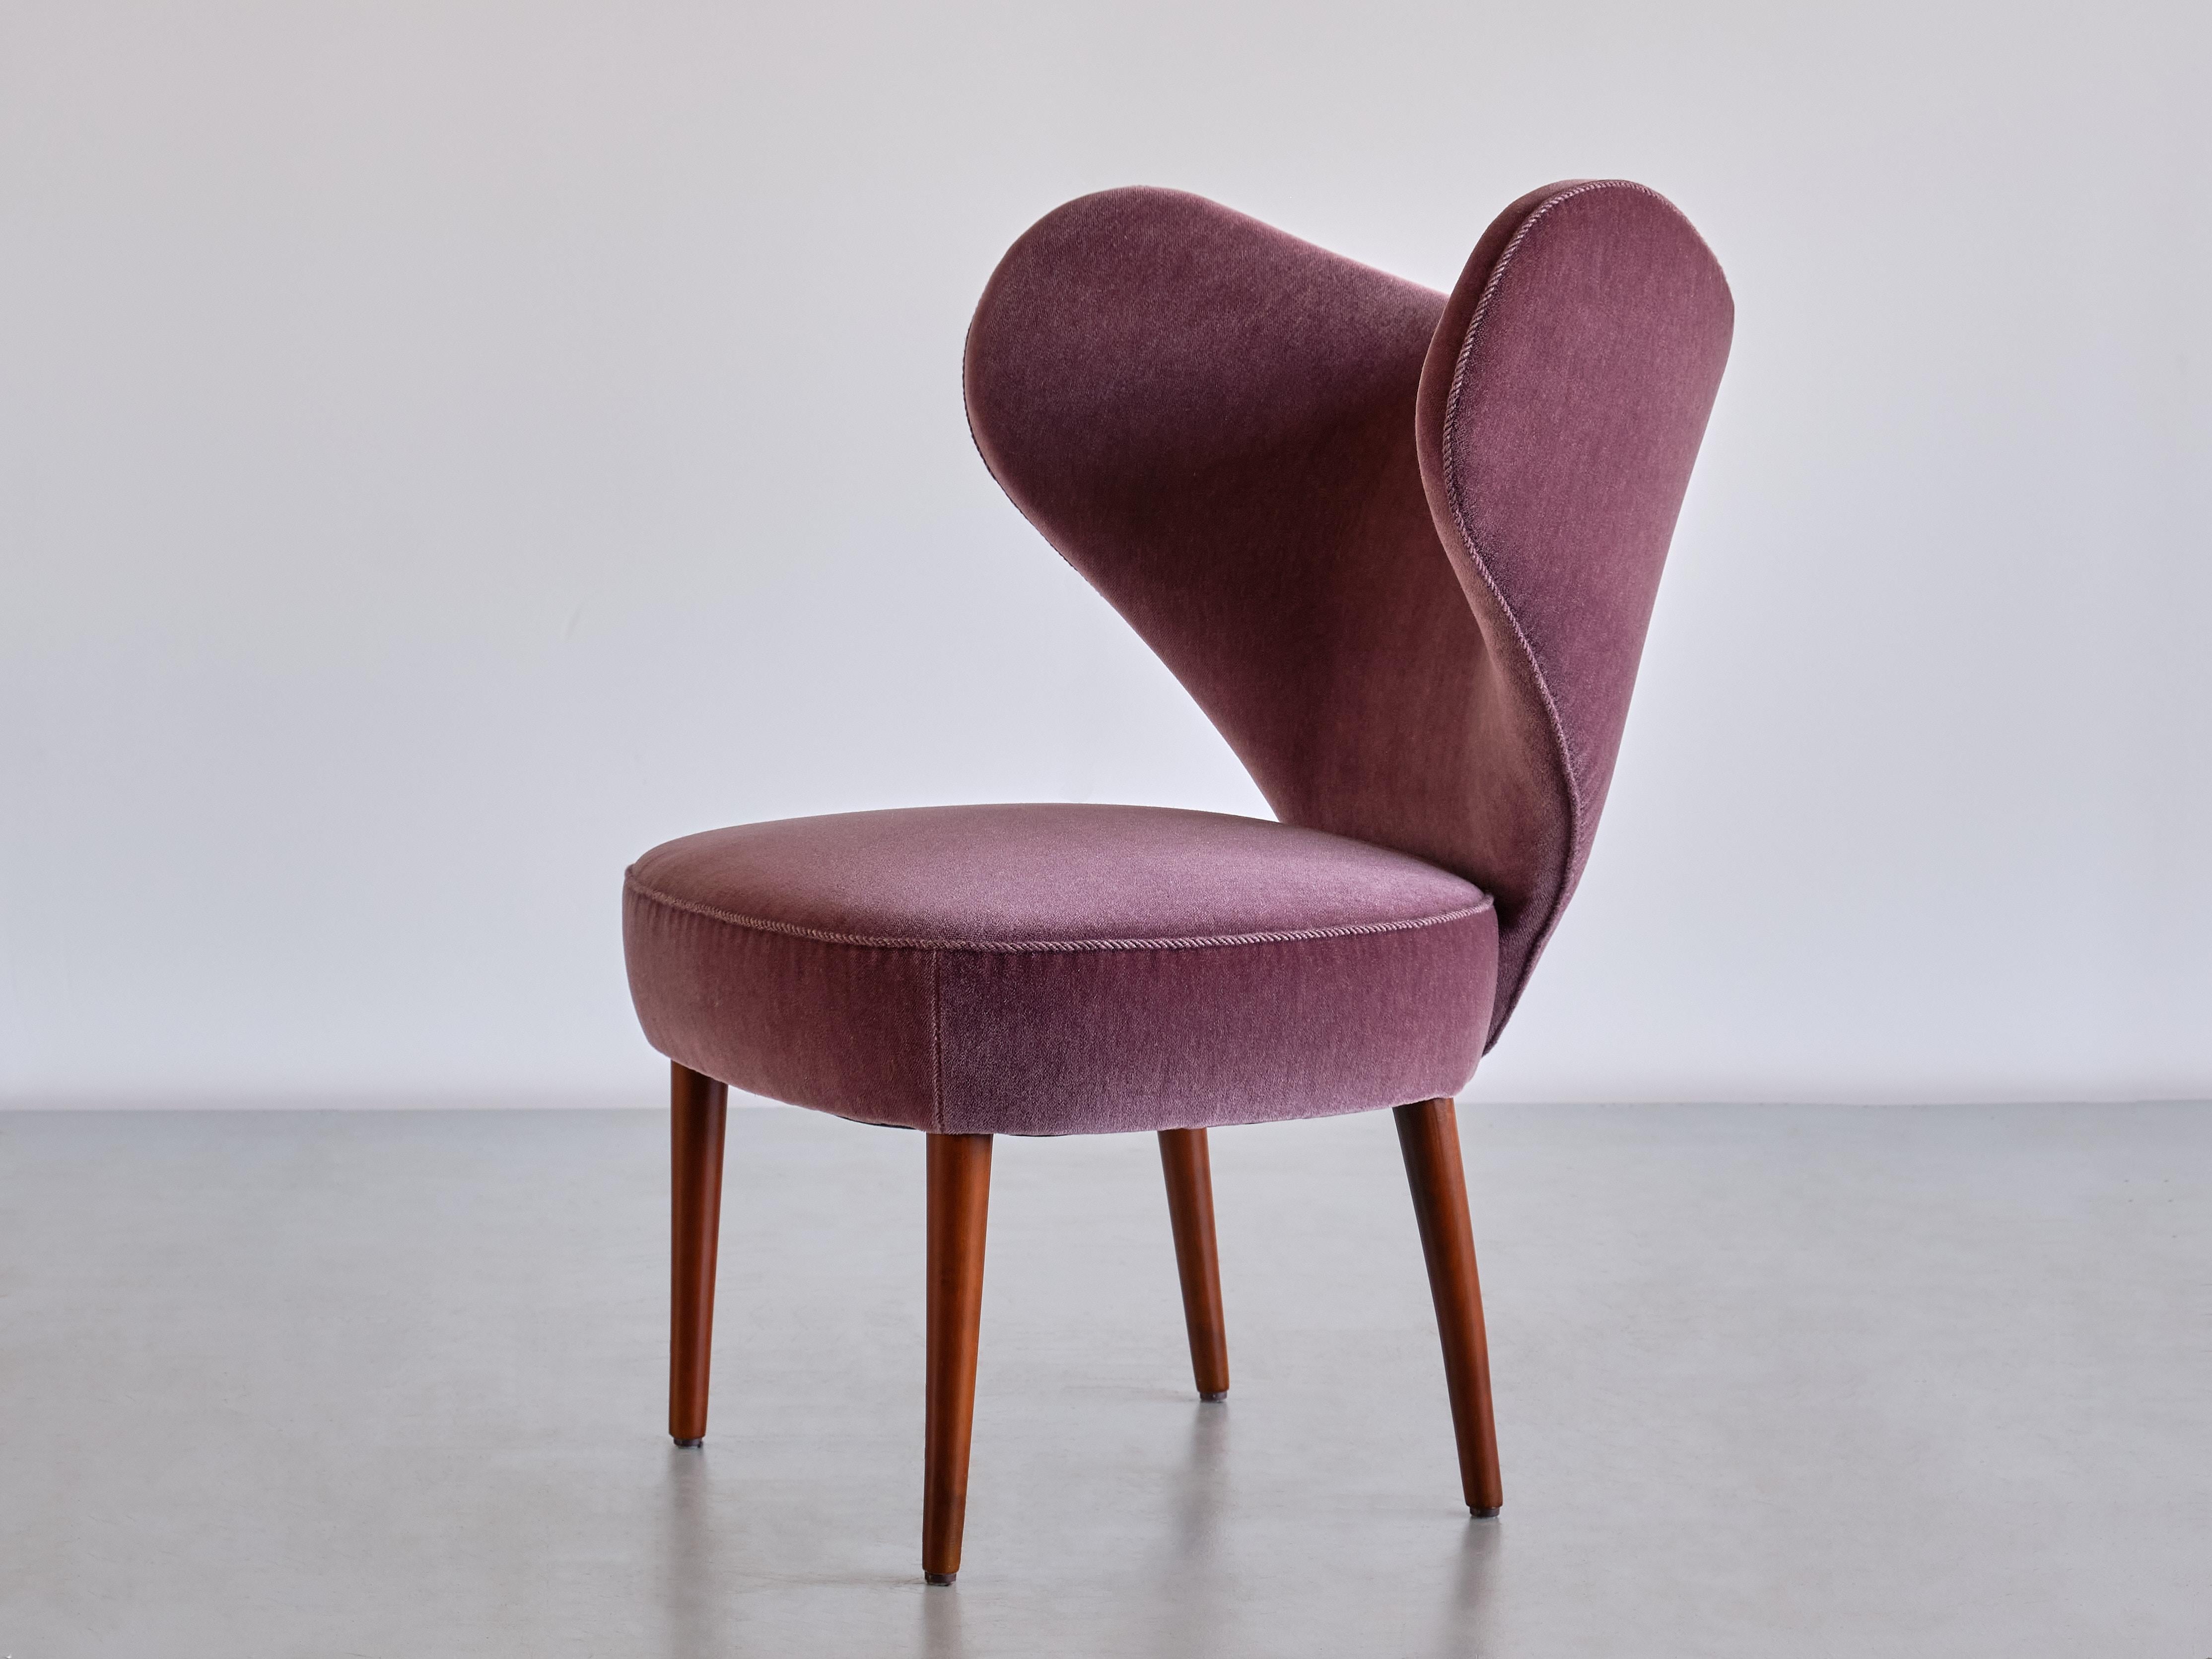 Exceptional 'Heart' Chair in Purple Mohair, Brøndbyøster Møbel, Denmark, 1953 For Sale 6